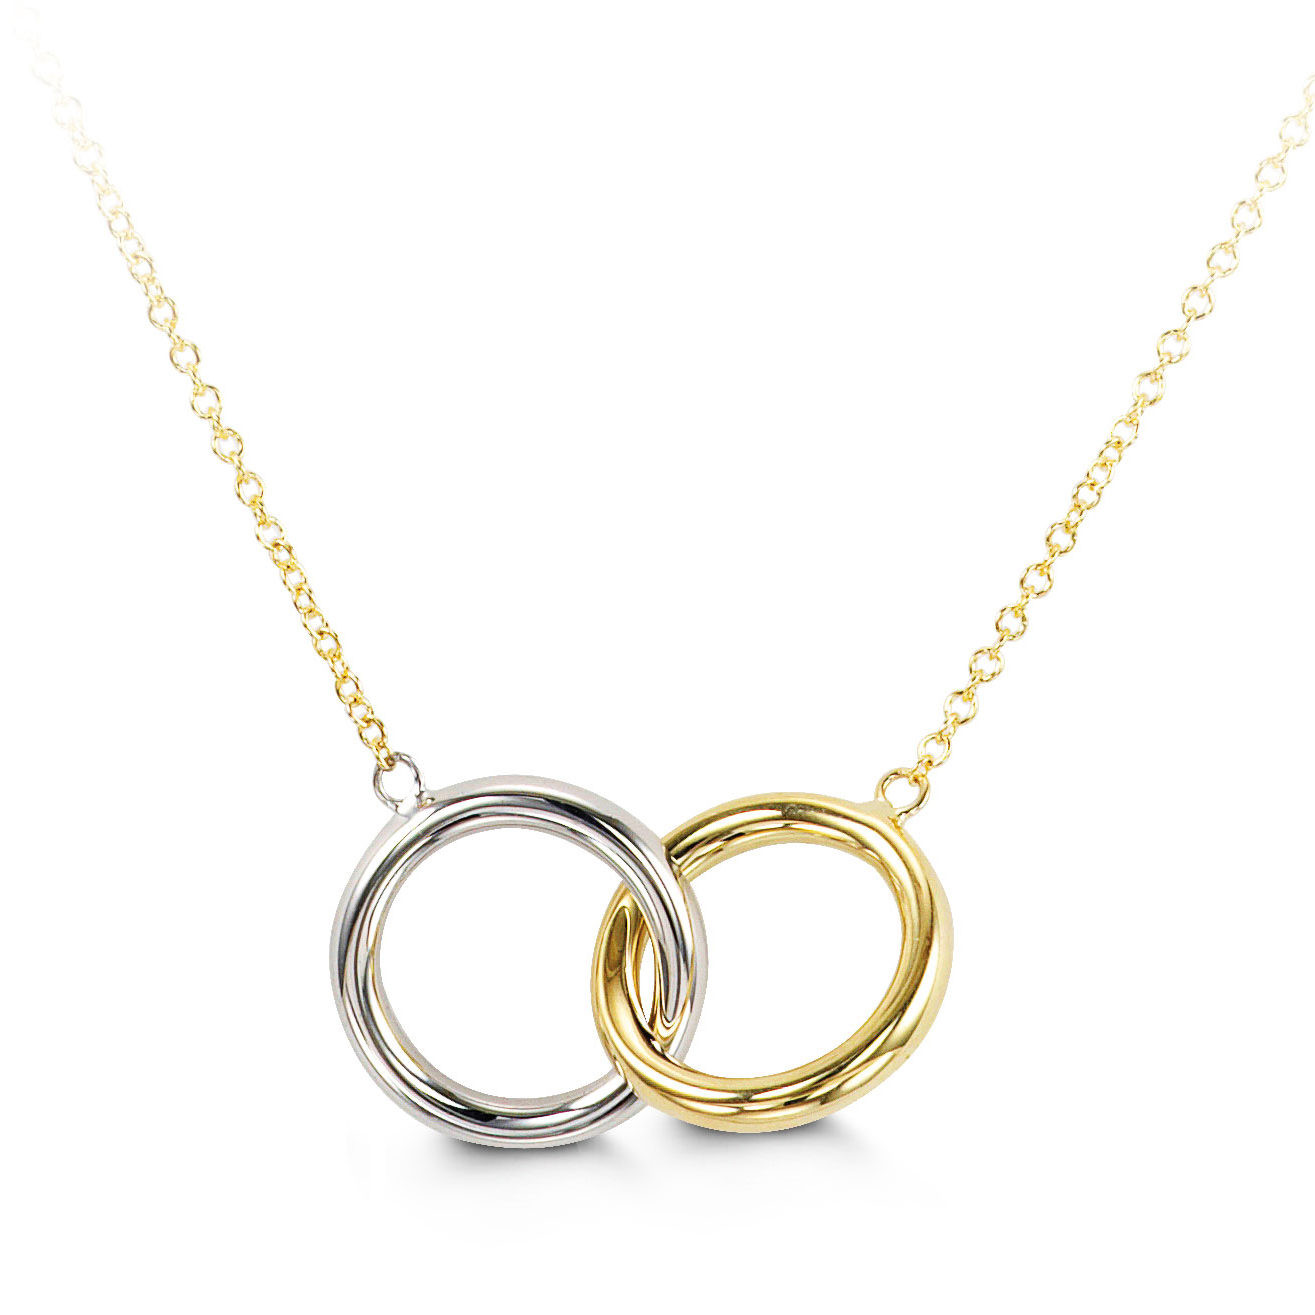 Interlocking Circle Necklace
 Yellow and White Gold Interlocking Circle Necklace